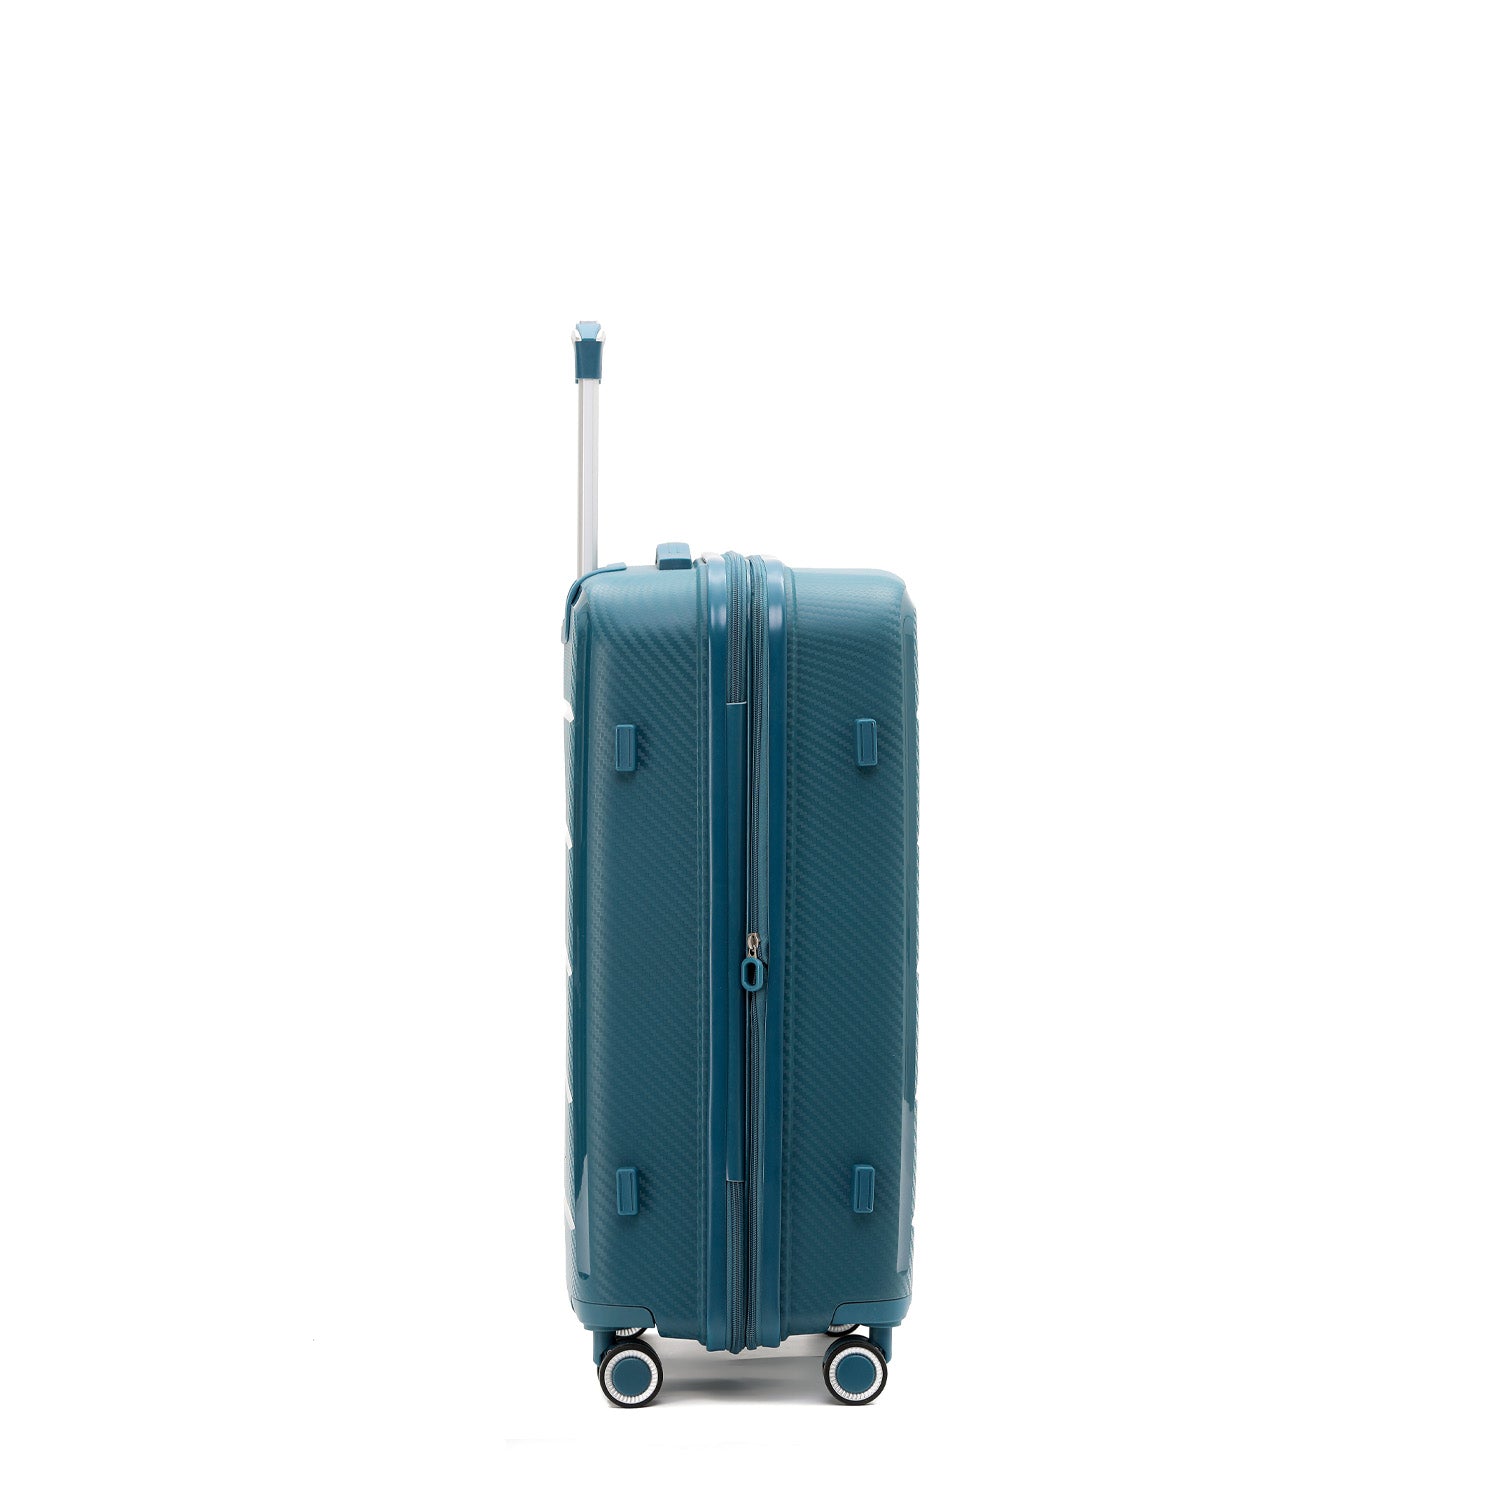 Paklite - PA7350 Medium 65cm spinner suitcase - Blue-4